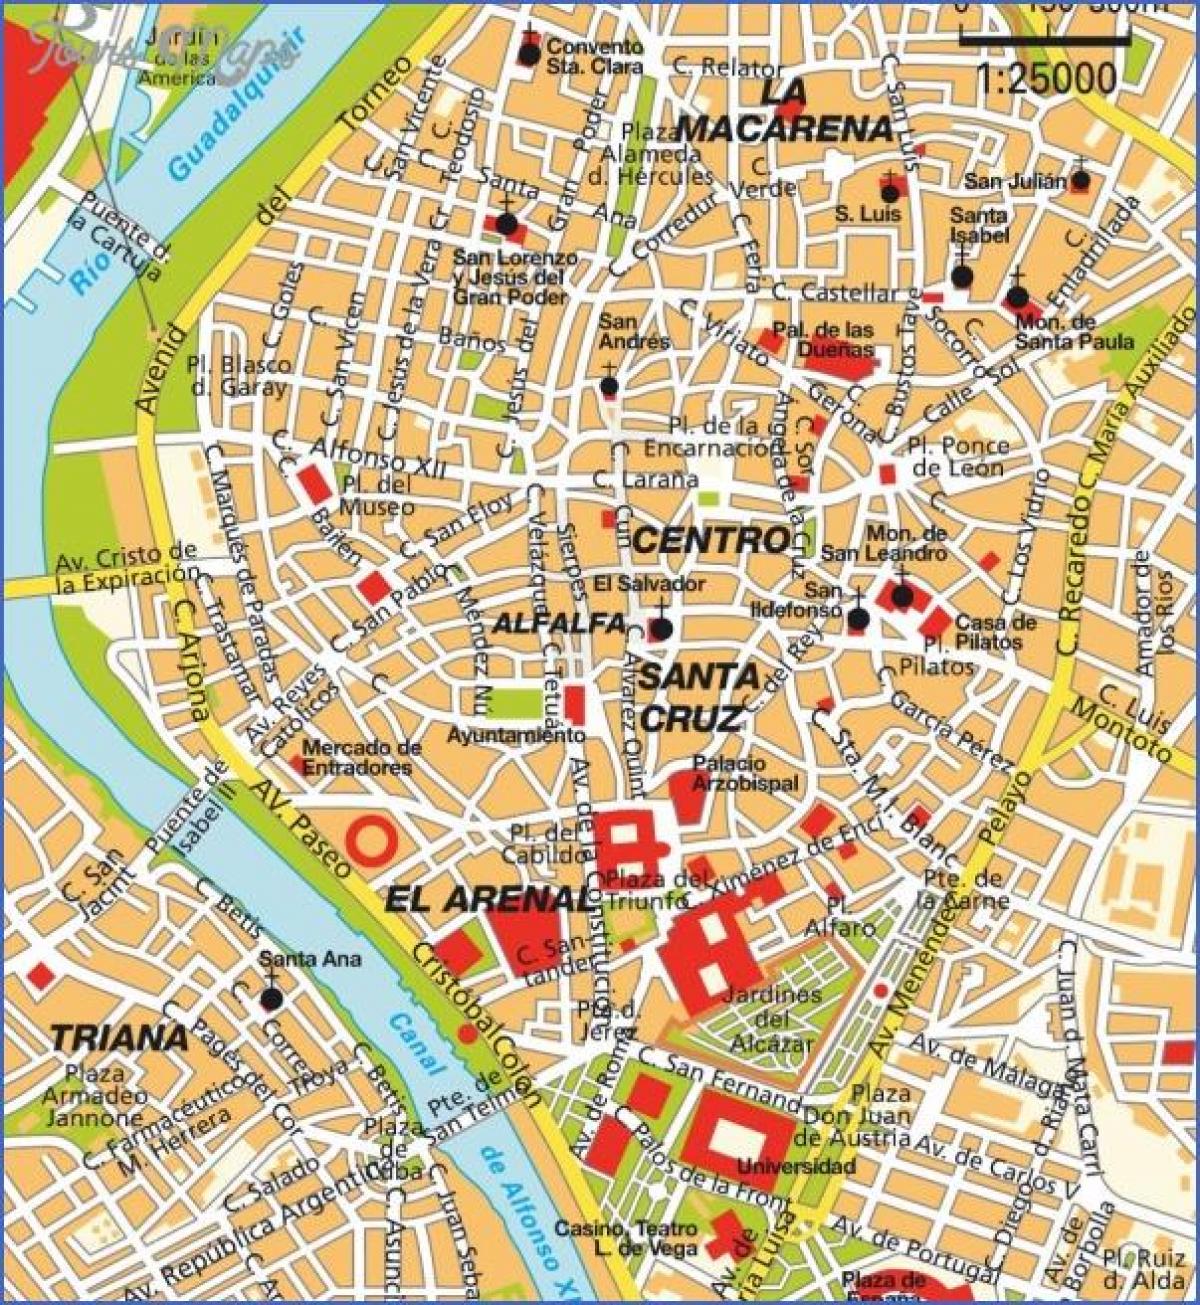 Sevilla spanje-kaart, toerisme-aantreklikhede